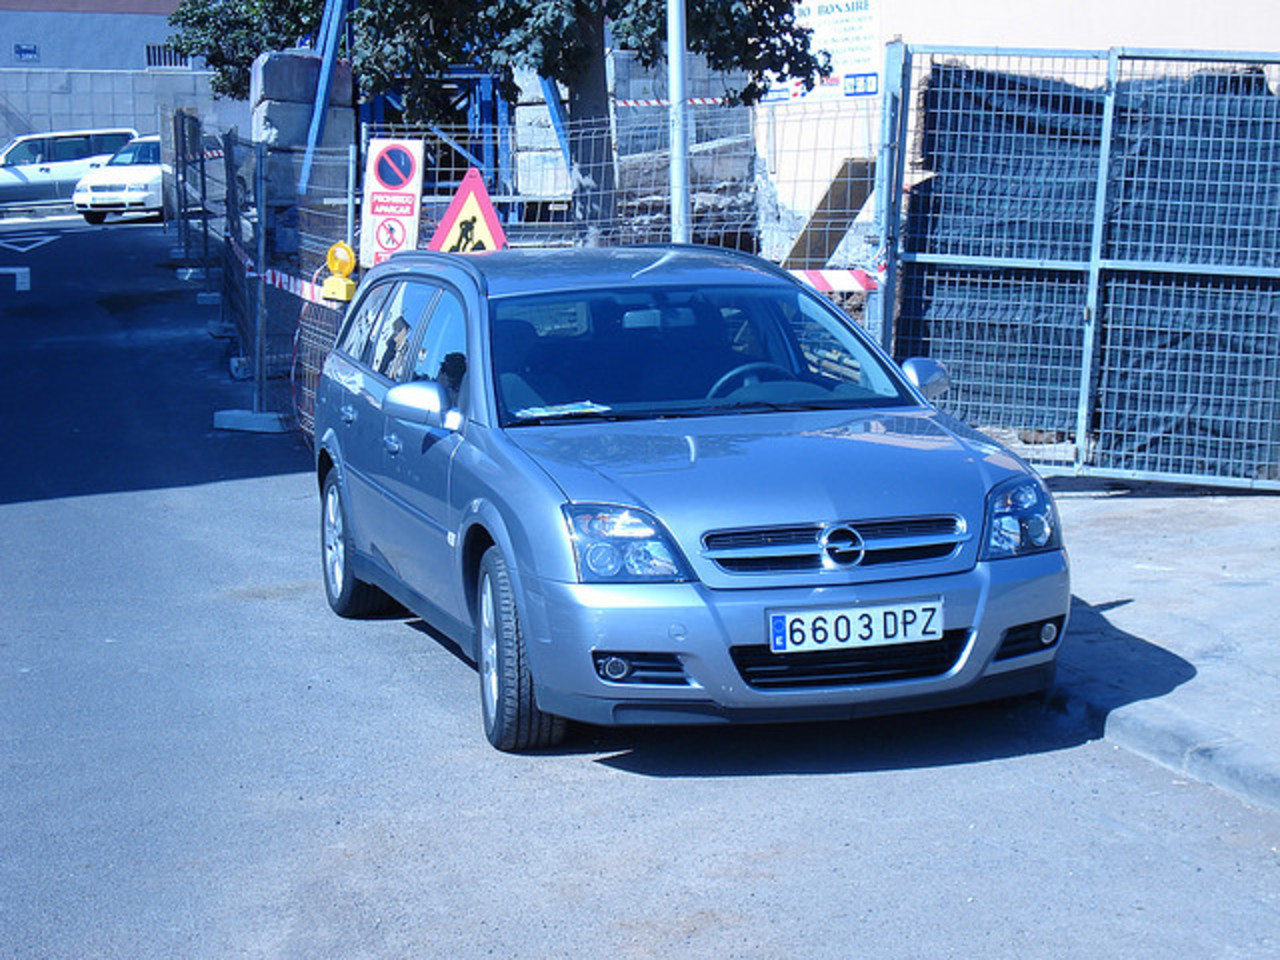 Opel Vectra Caravan 2006 | Flickr - Photo Sharing!